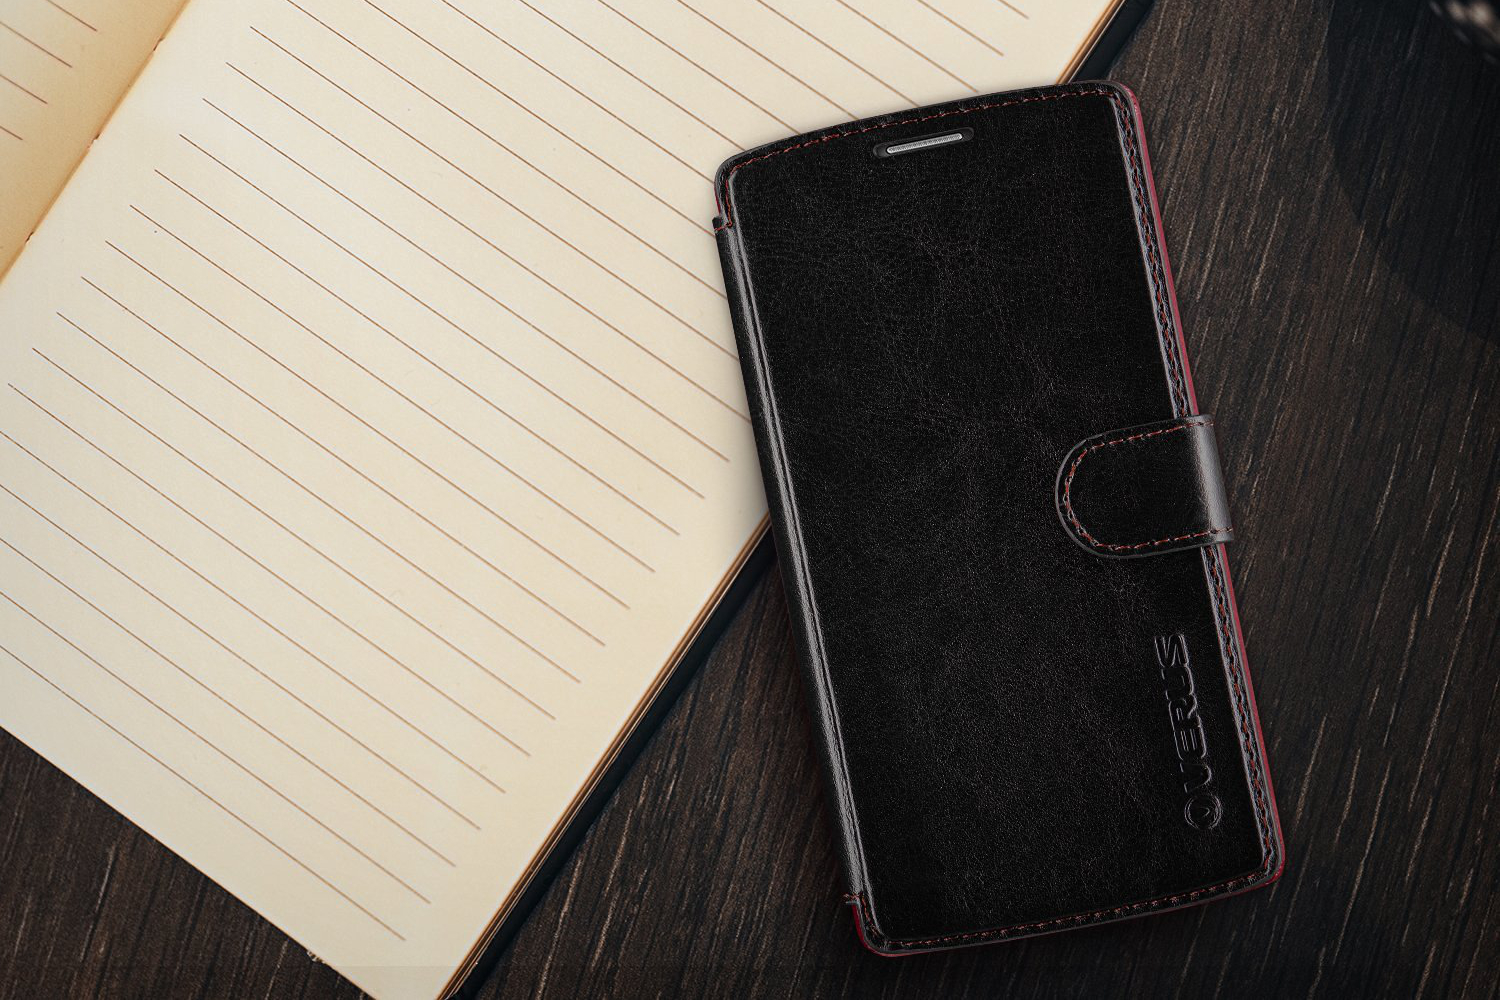 Souvenir Darmen Verdampen The 20 Best LG G4 Cases and Covers | Digital Trends